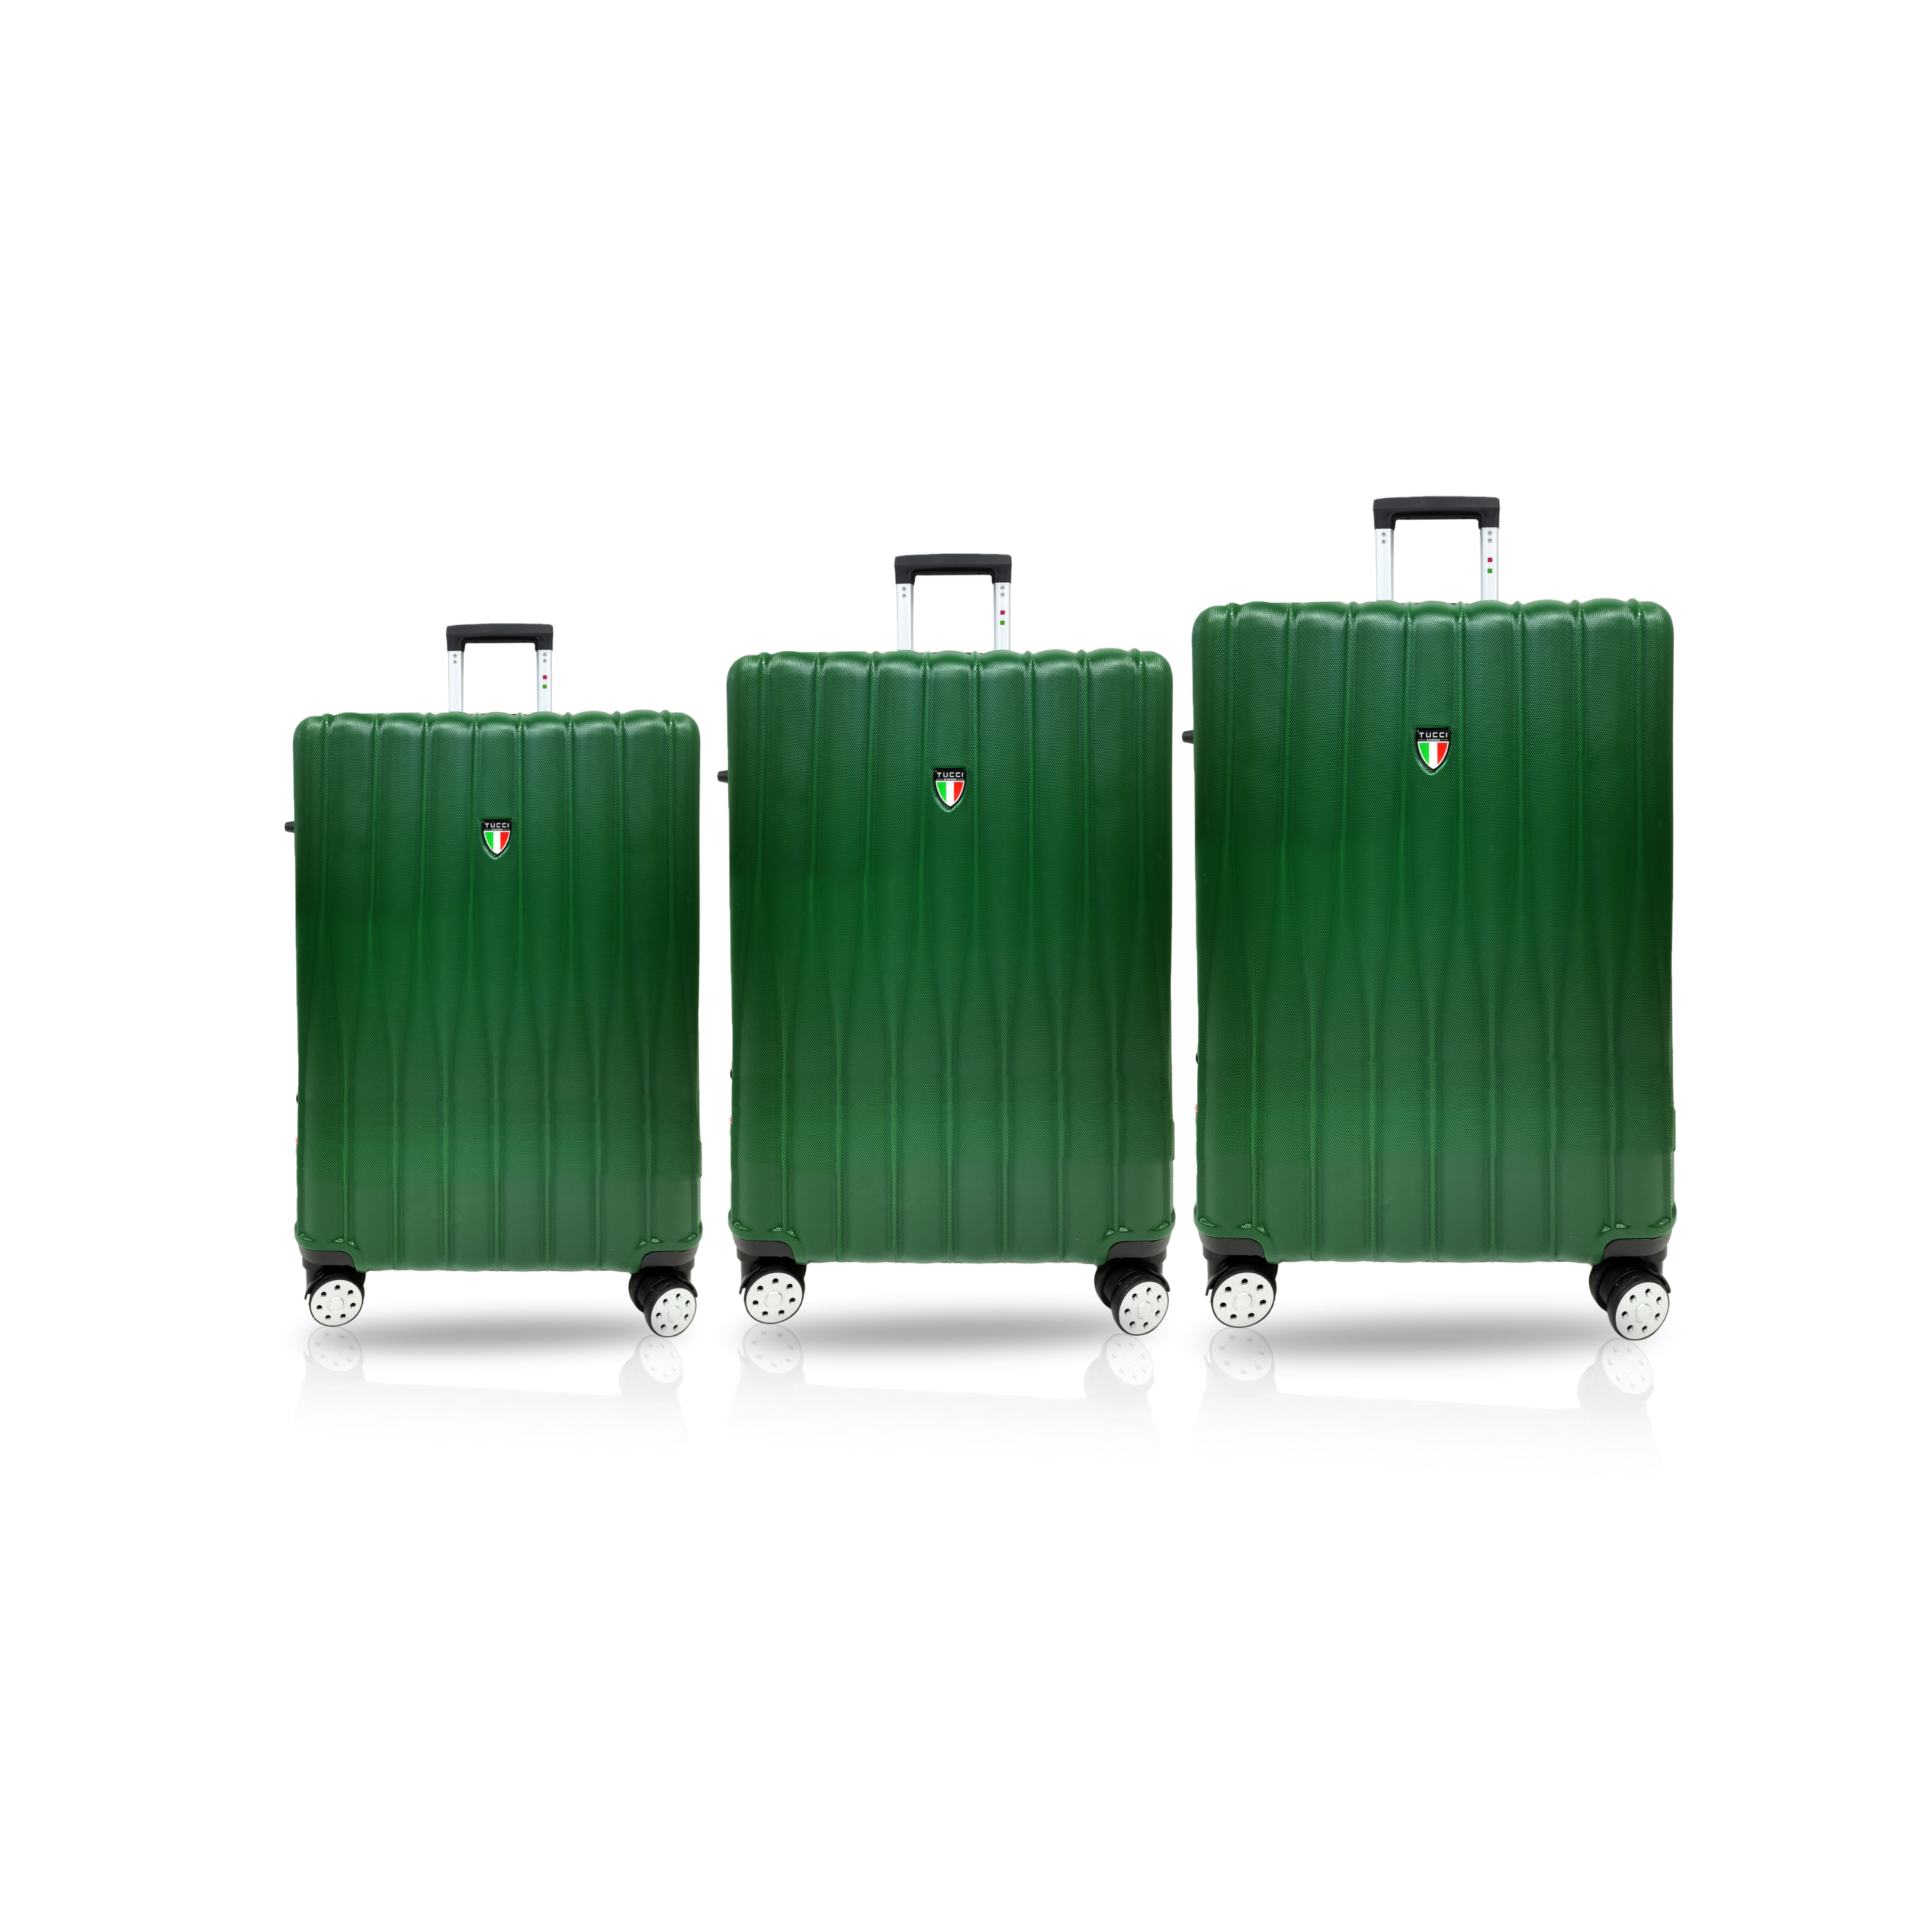 TUCCI BARATRO ABS 3 PC (20", 24", 28") Luggage Set